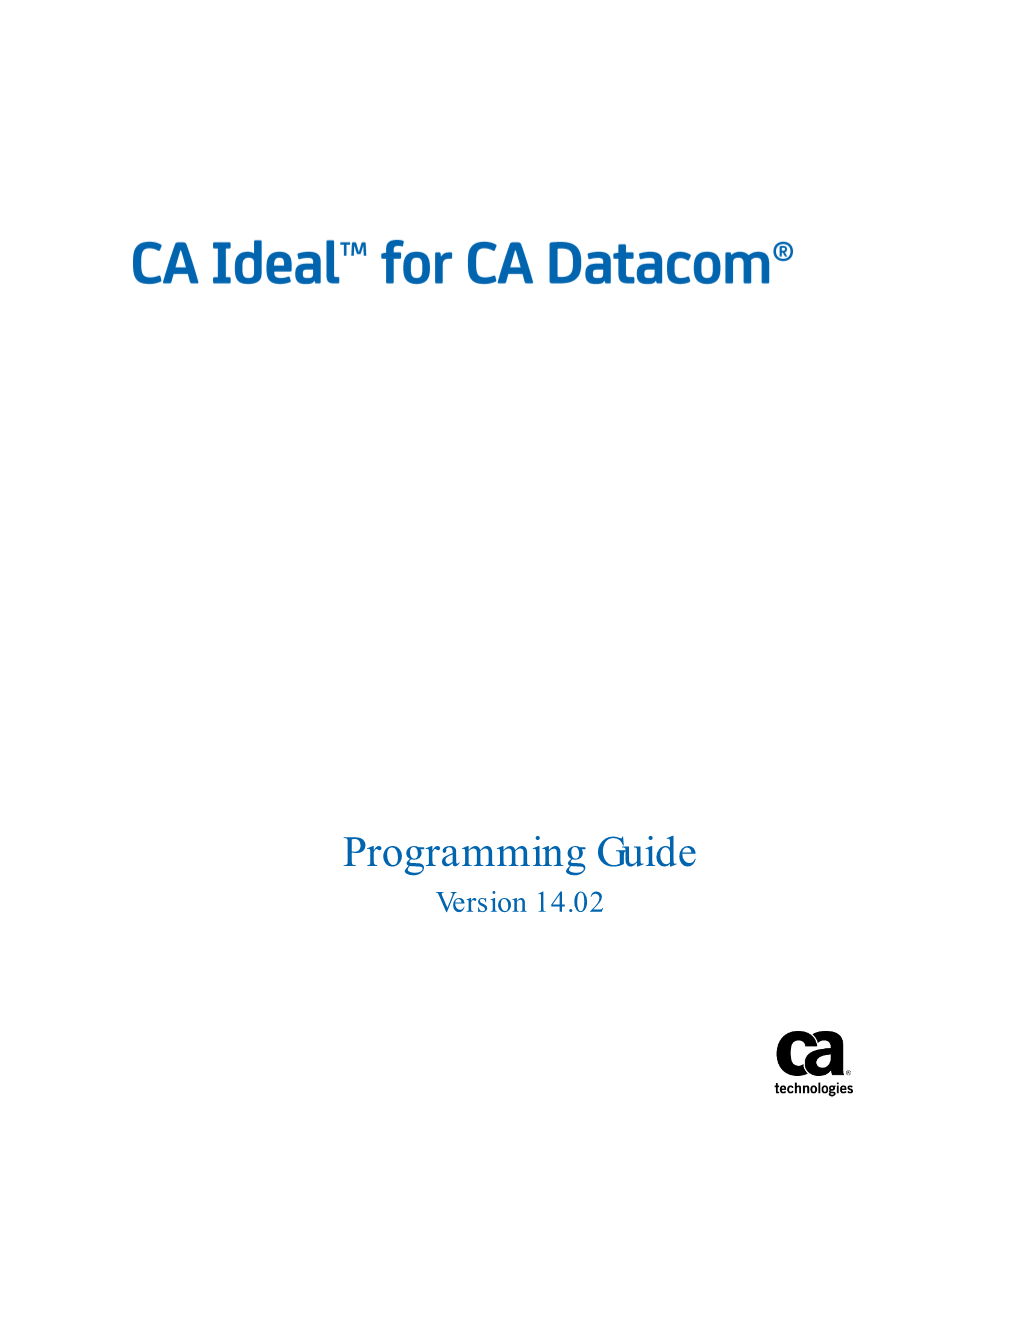 CA Ideal for CA Datacom Programming Guide